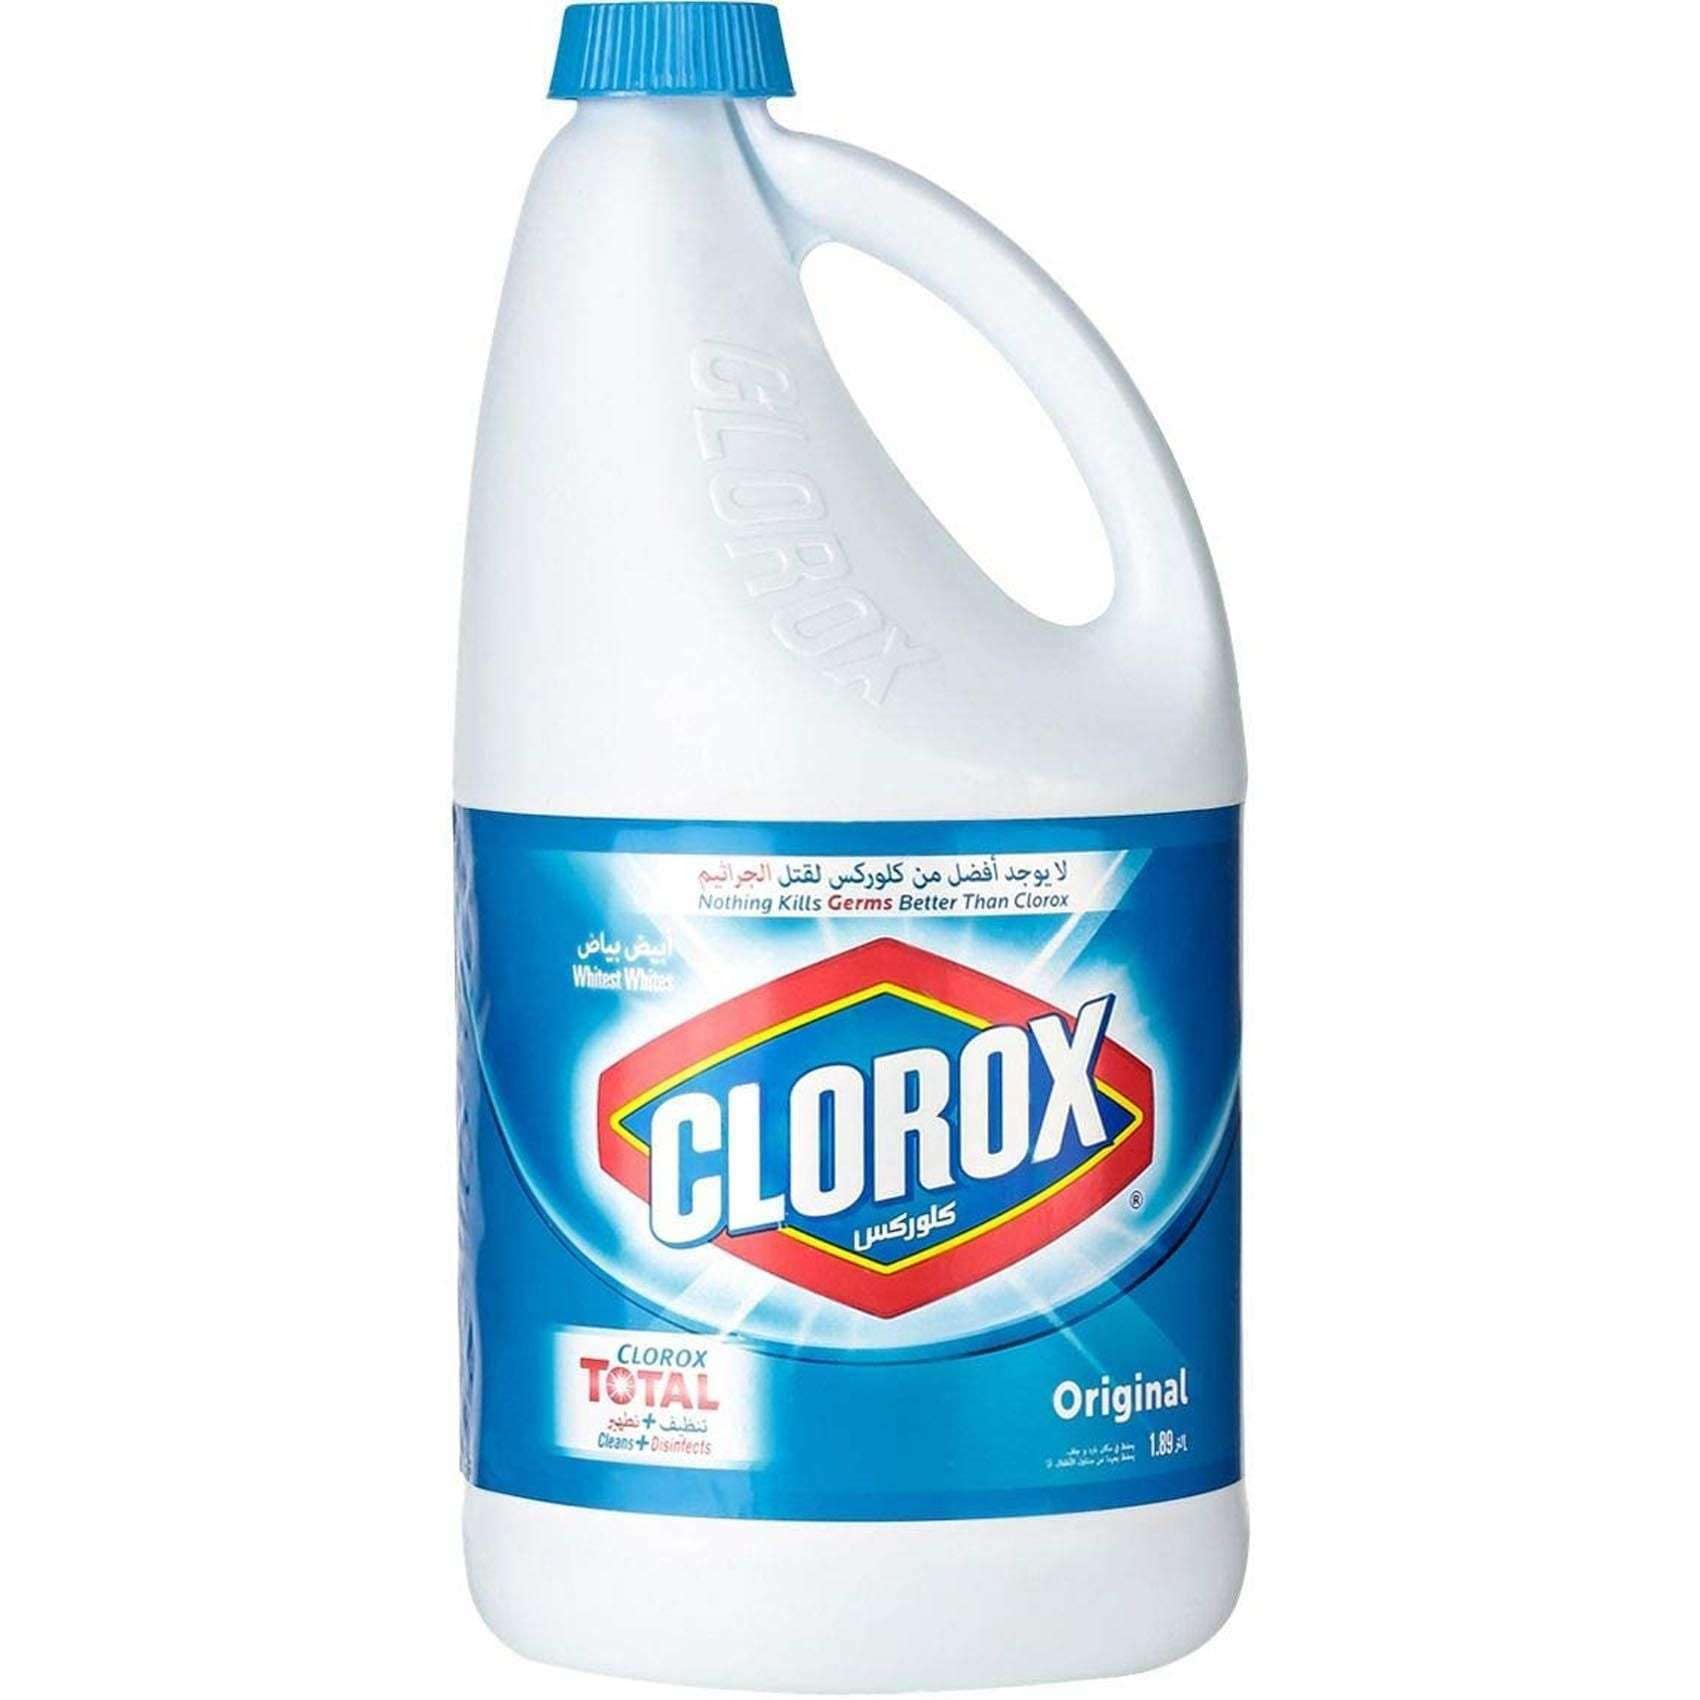 Buy Clorox Original Bleach 1.89L Online - Shop Cleaning & Household on ...